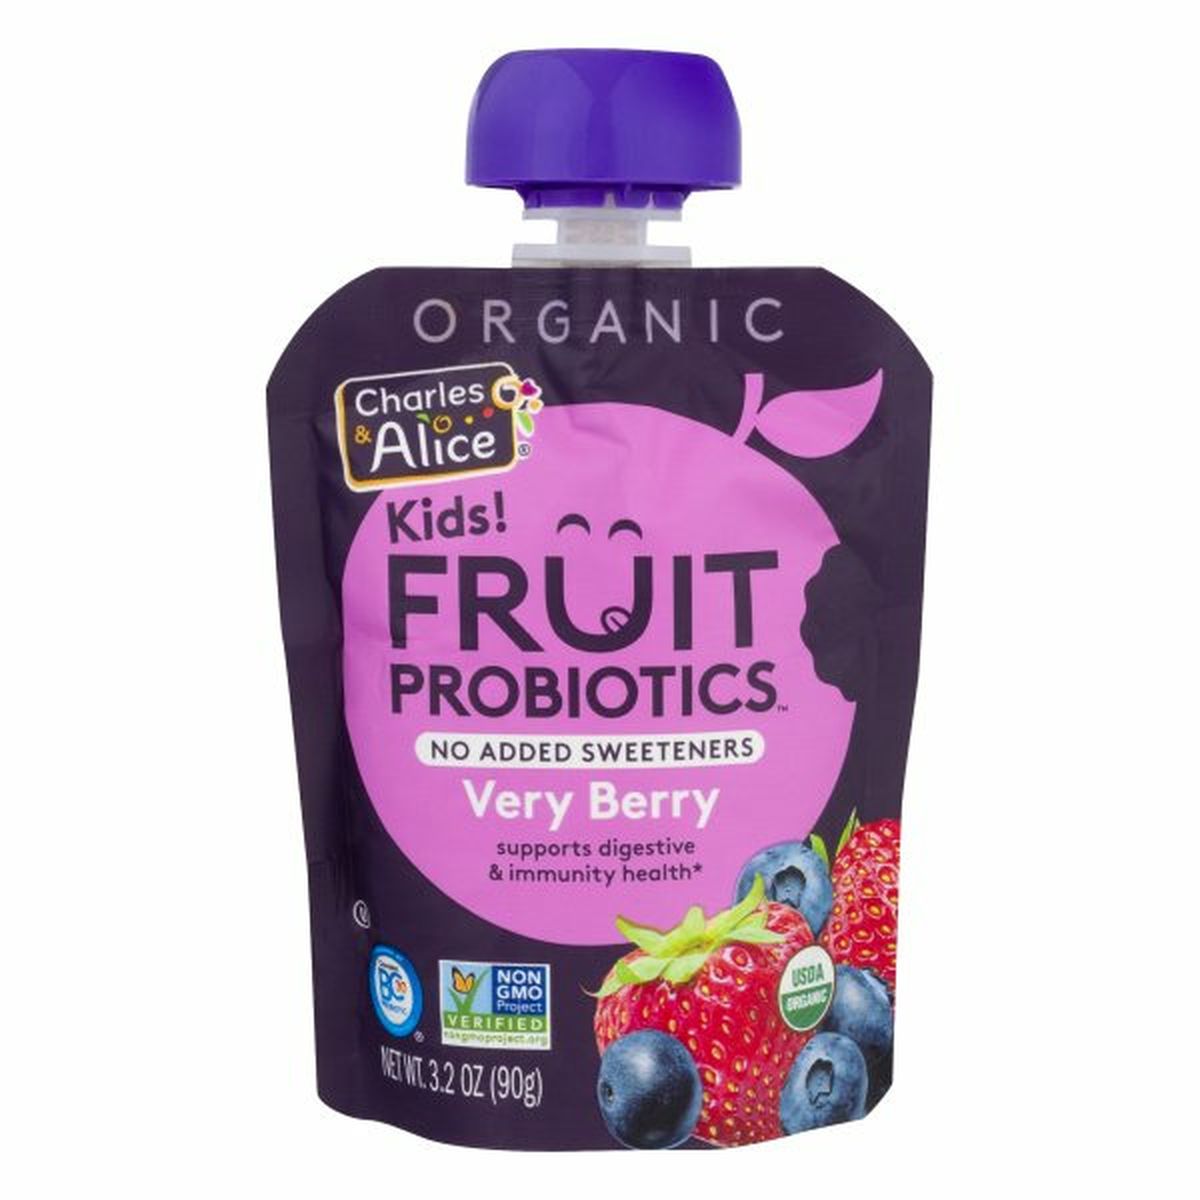 Calories in Charles & Alice Fruit Probiotics, Organic, Very Berry, Kids!